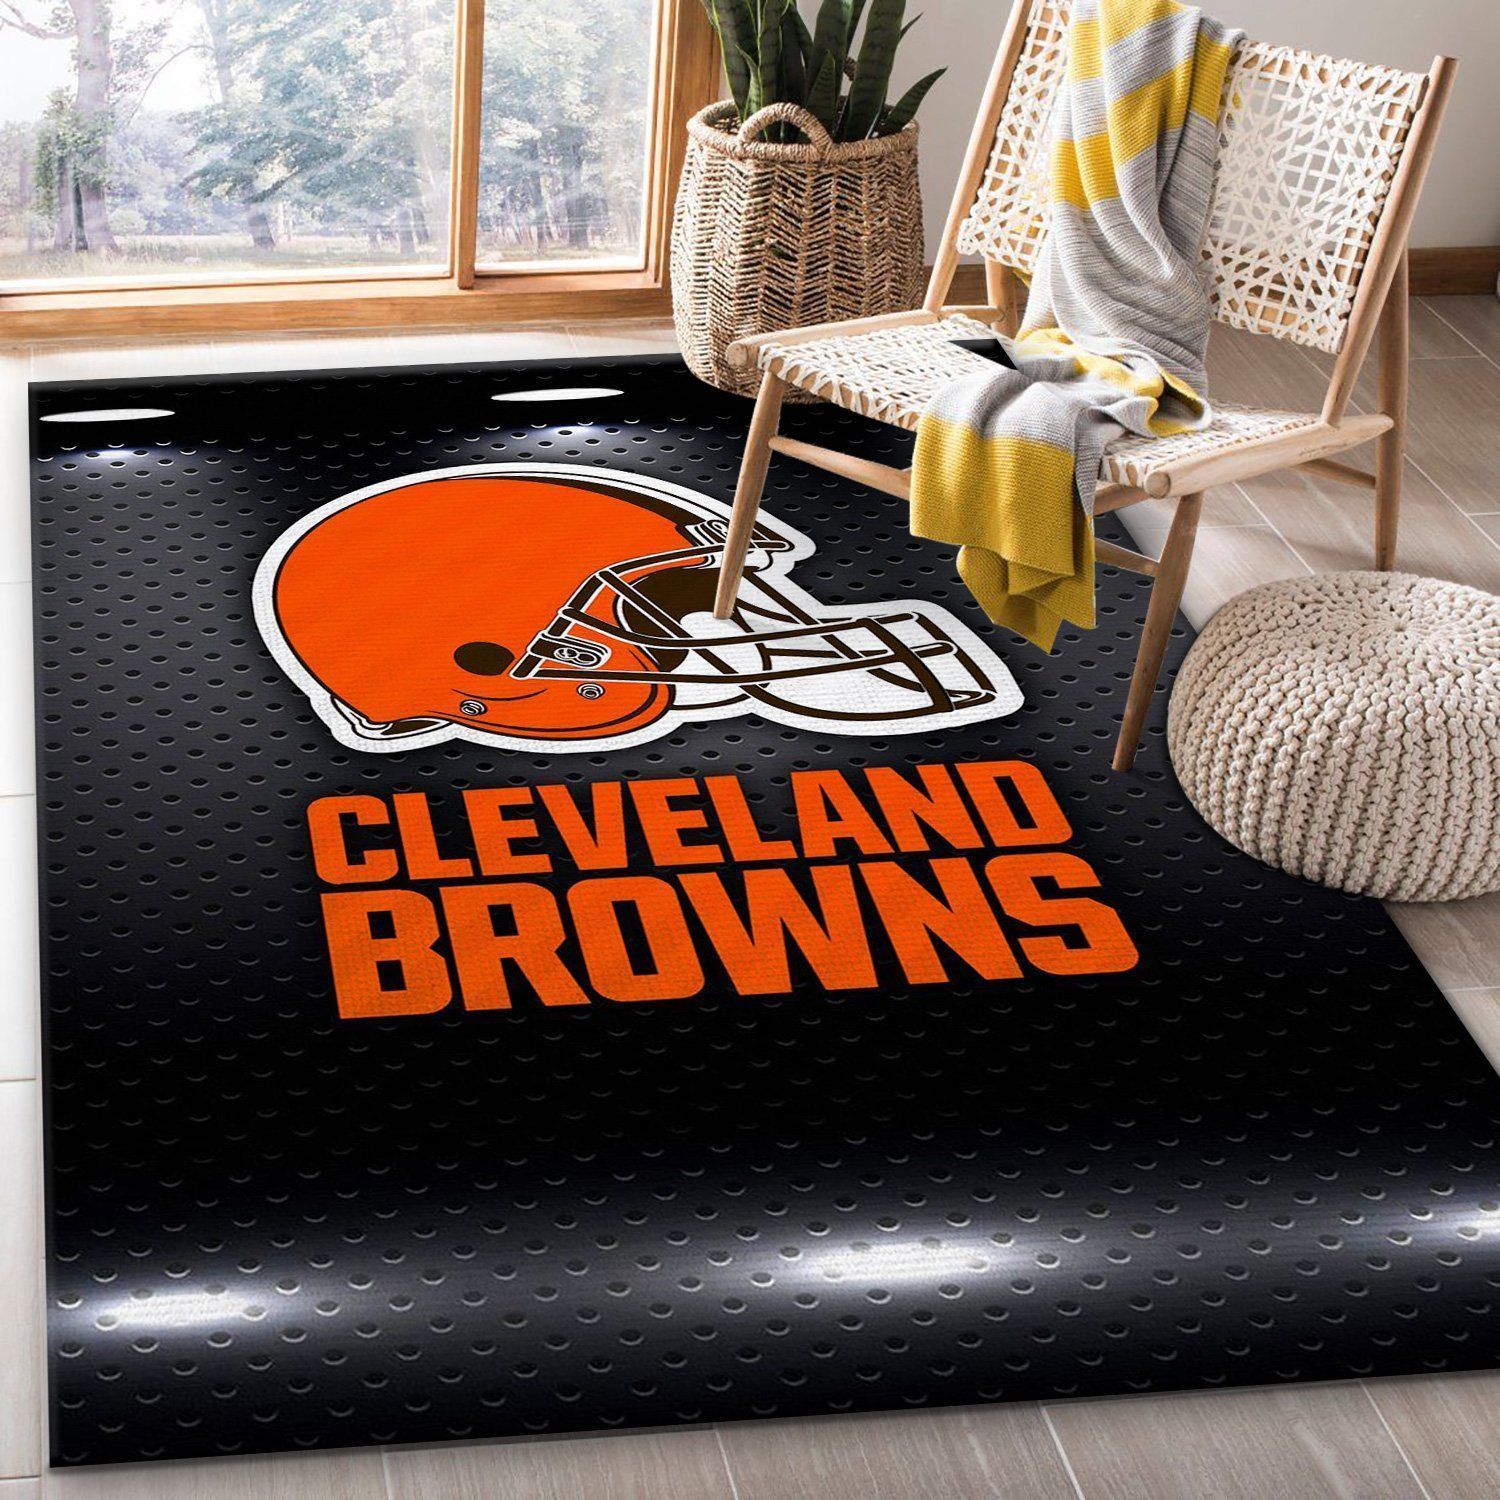 Cleveland Browns Nfl Rug Bedroom Rug Home US Decor - Indoor Outdoor Rugs